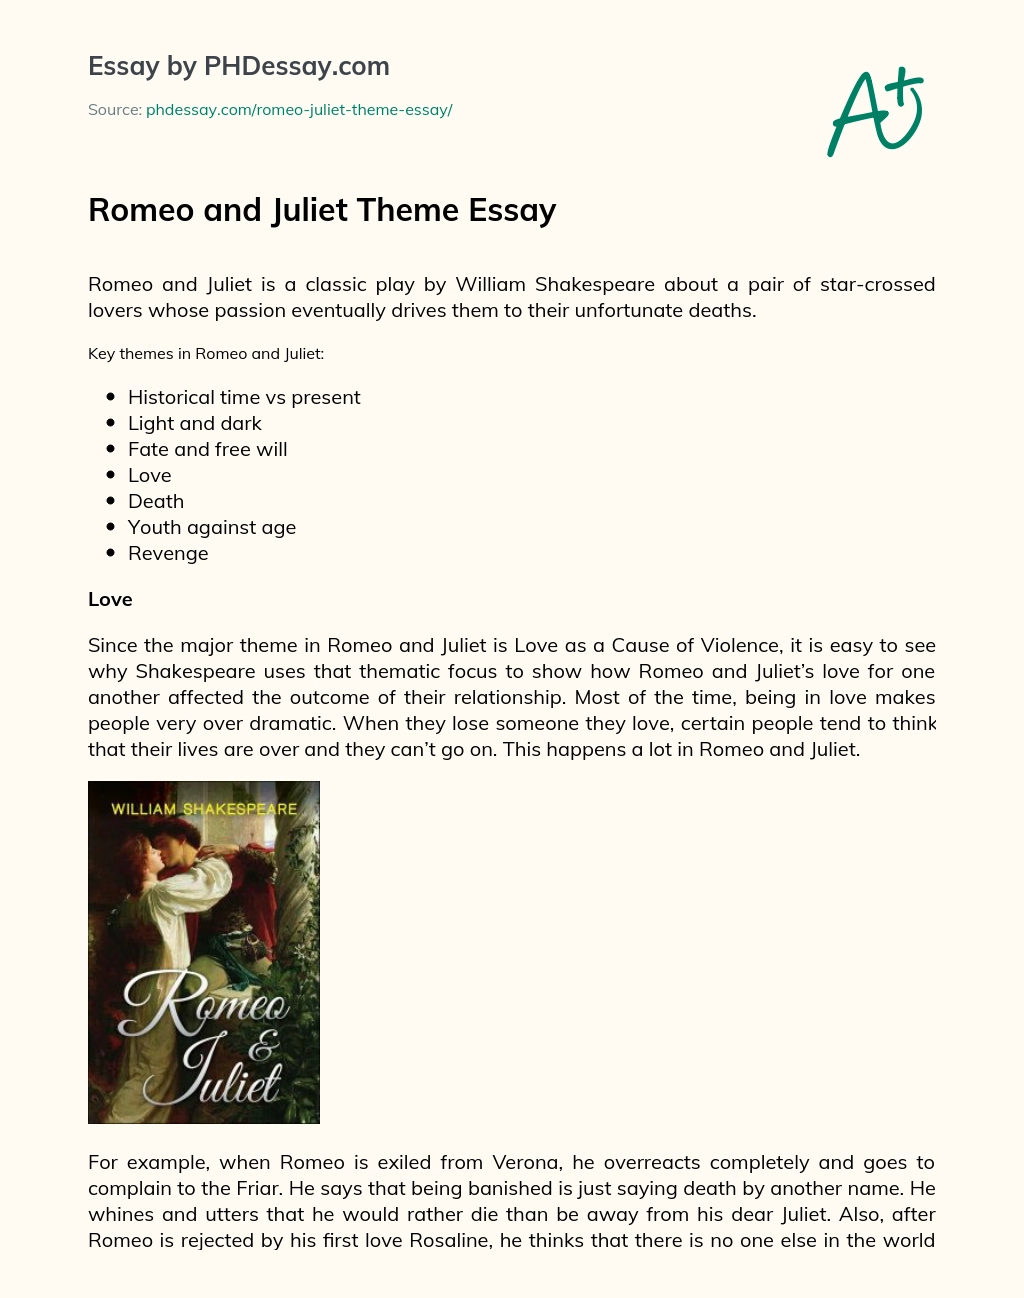 Romeo and Juliet Theme Essay - PHDessay.com